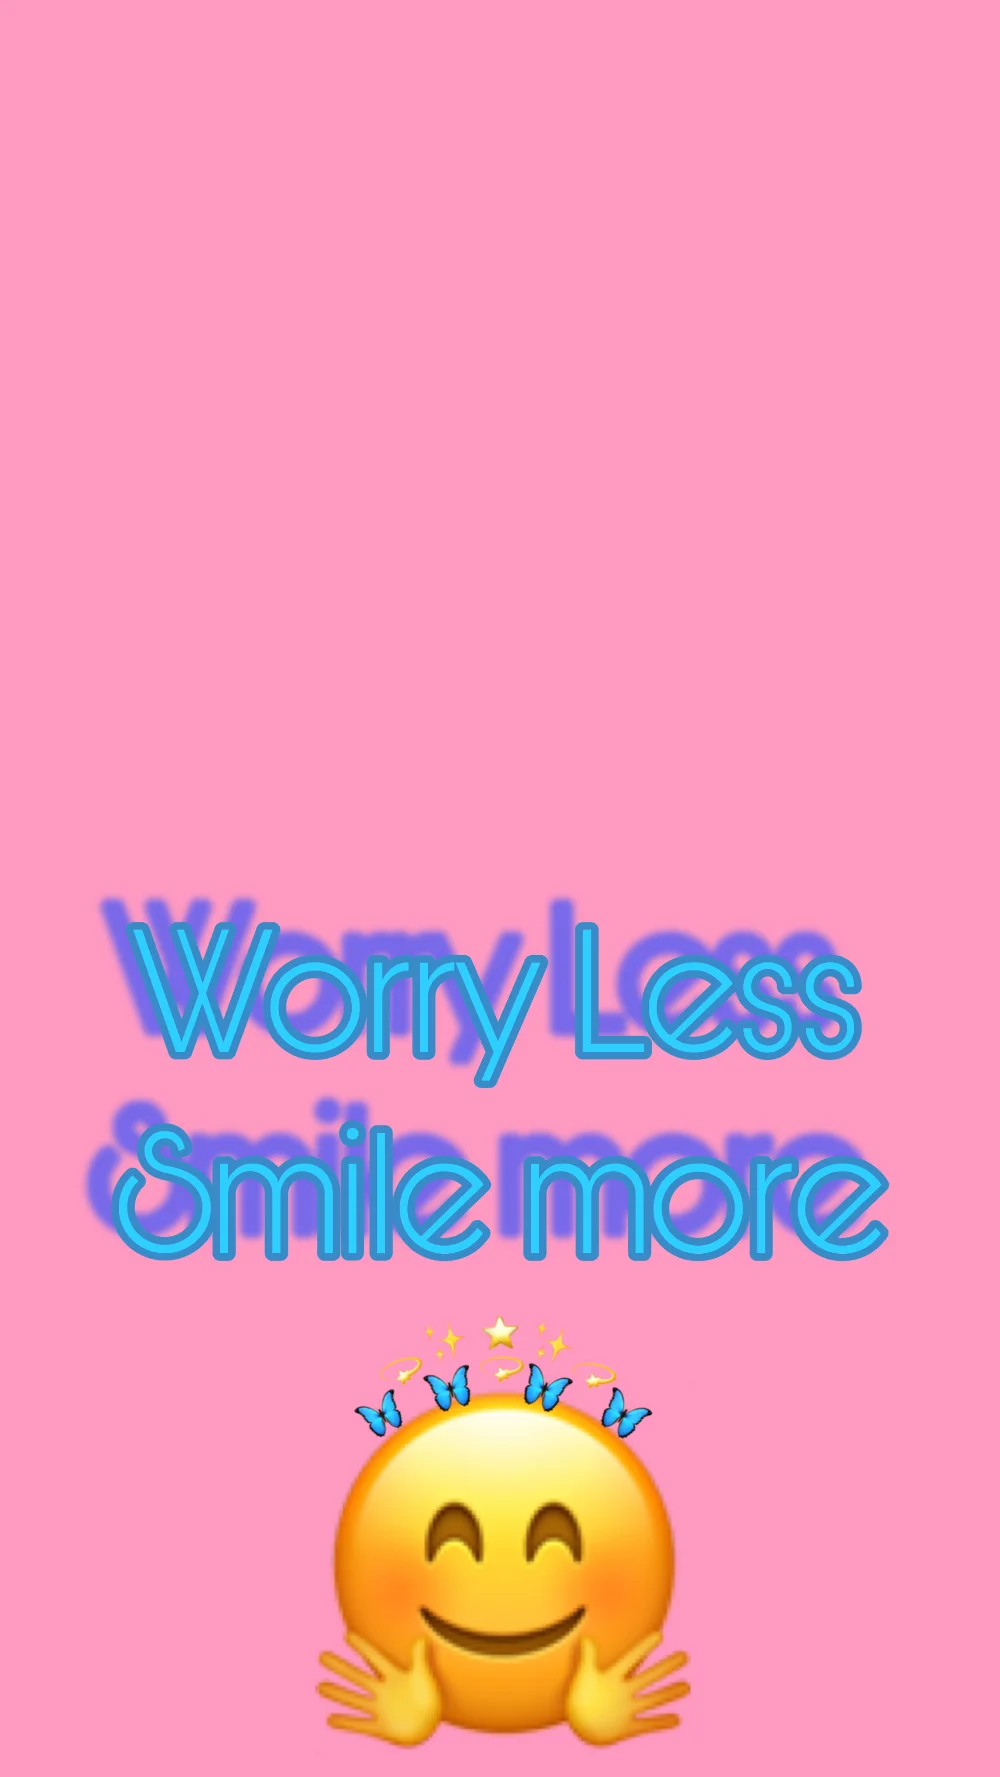 #freetoedit #worry #less #smile